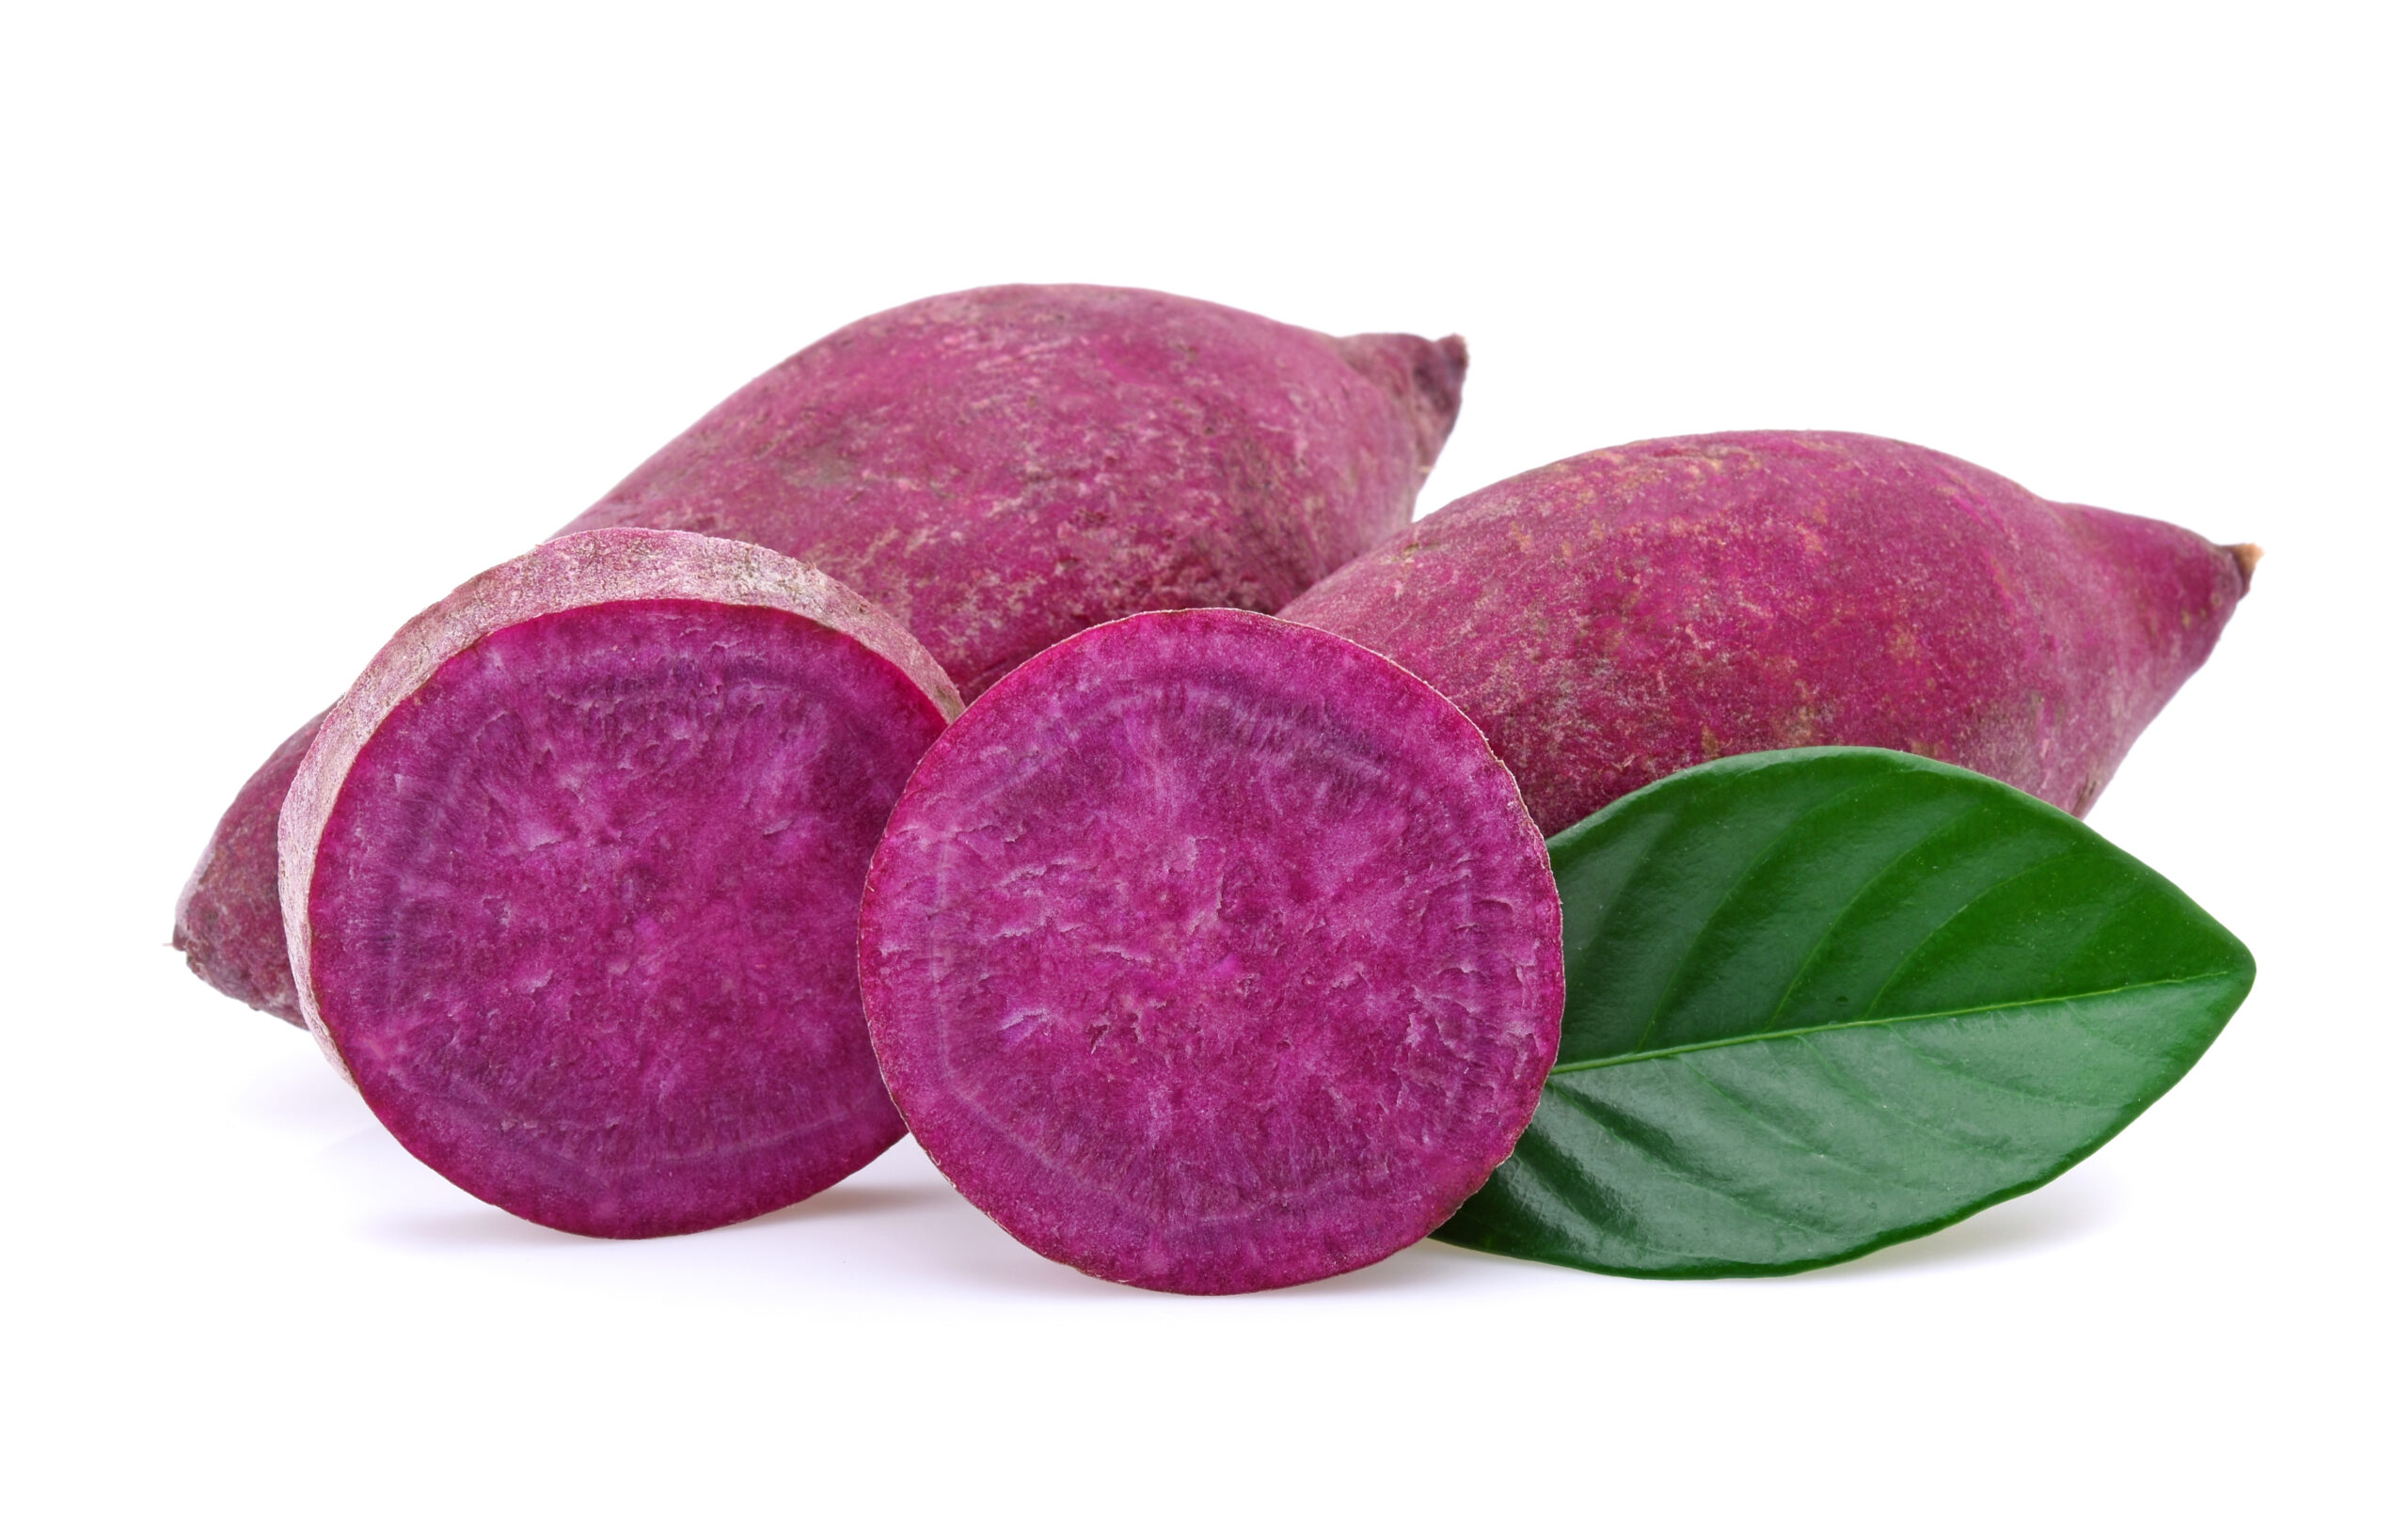 How To Cook Purple Sweet Potatoes